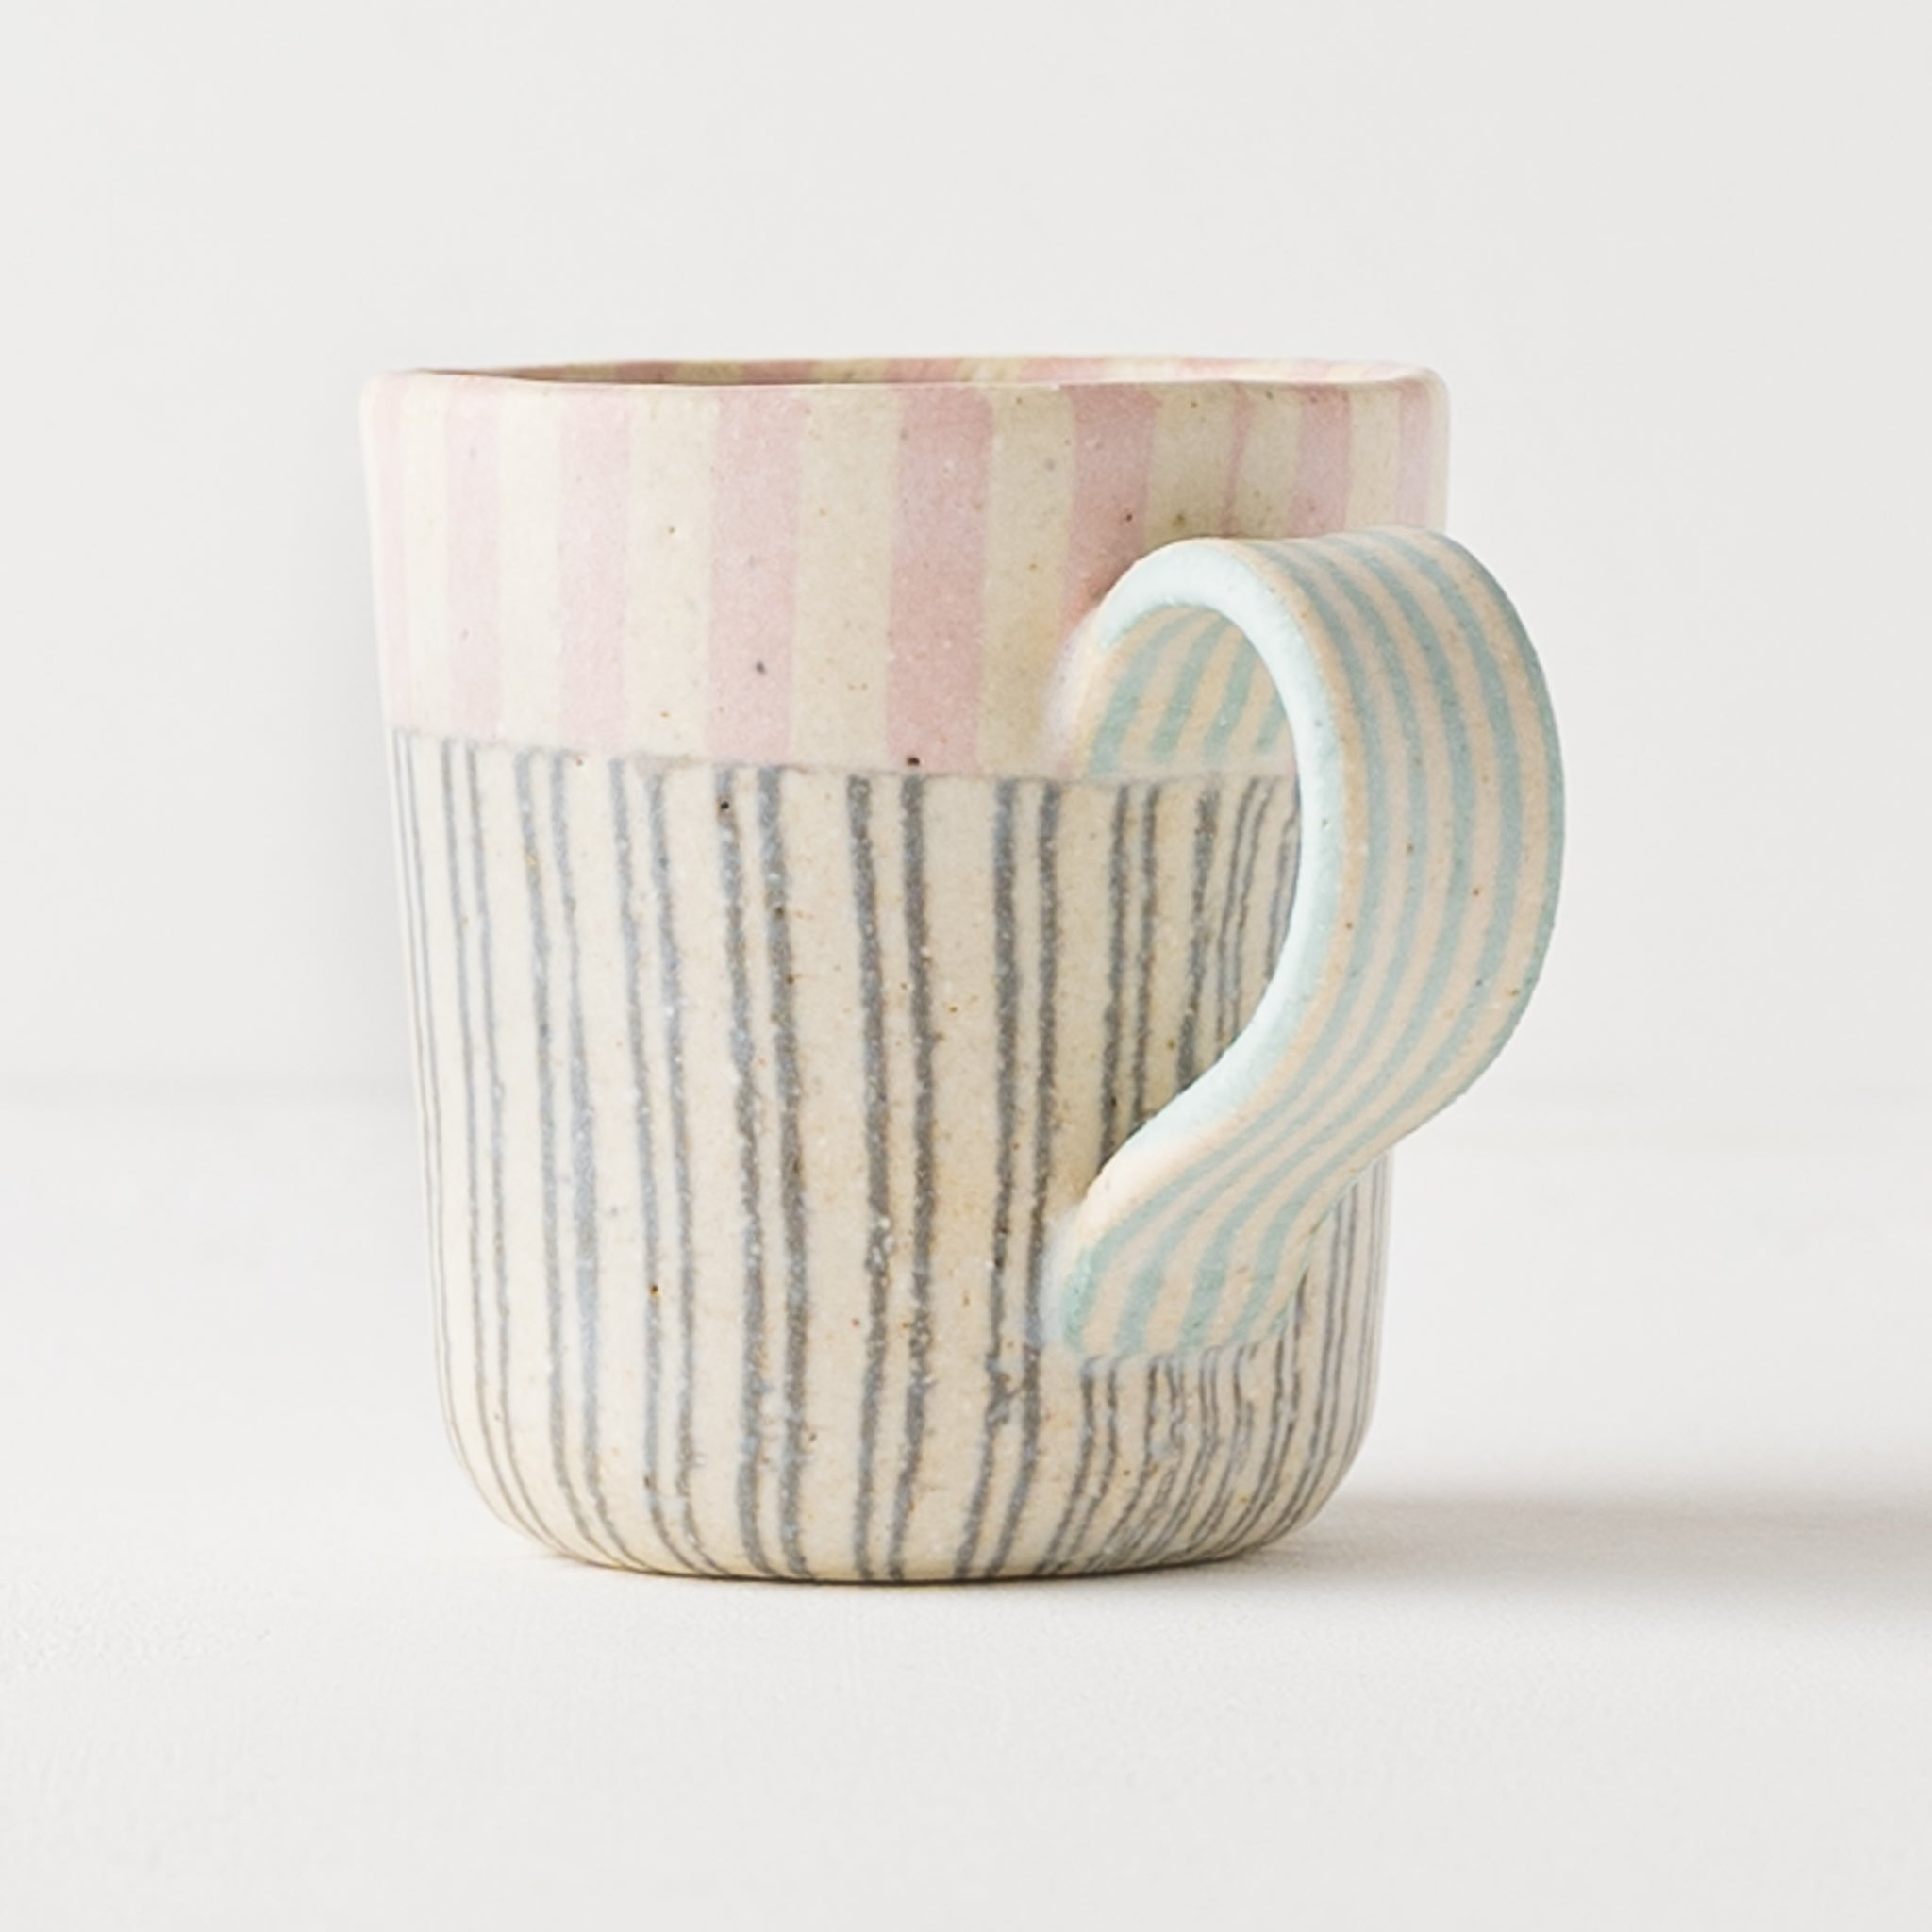 Mug made by Hanako Sakashita with cute gentle pink and light blue.